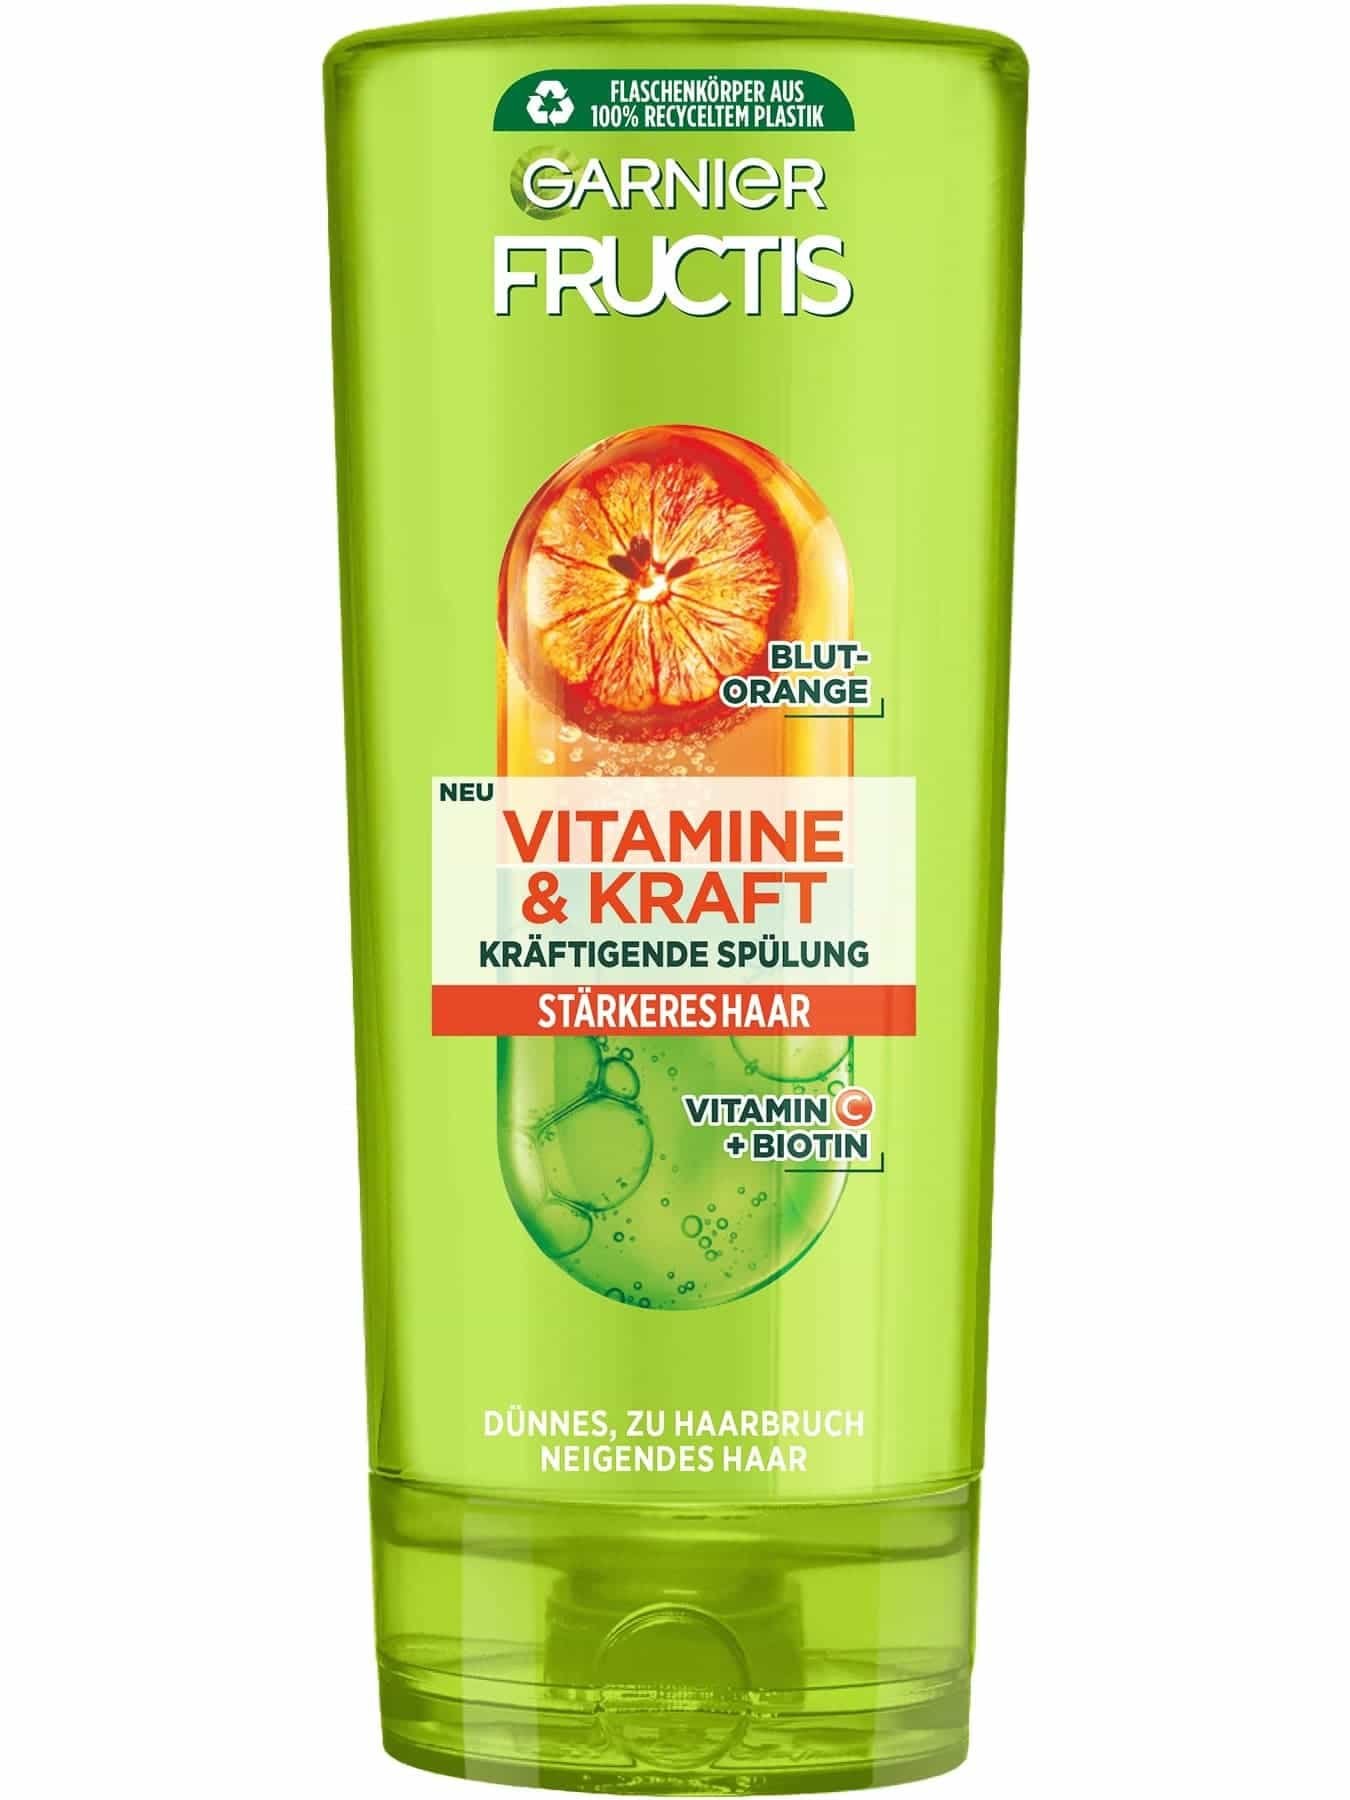 Fructis Vitamine & Kraft Kräftigende Spülung Produktbild